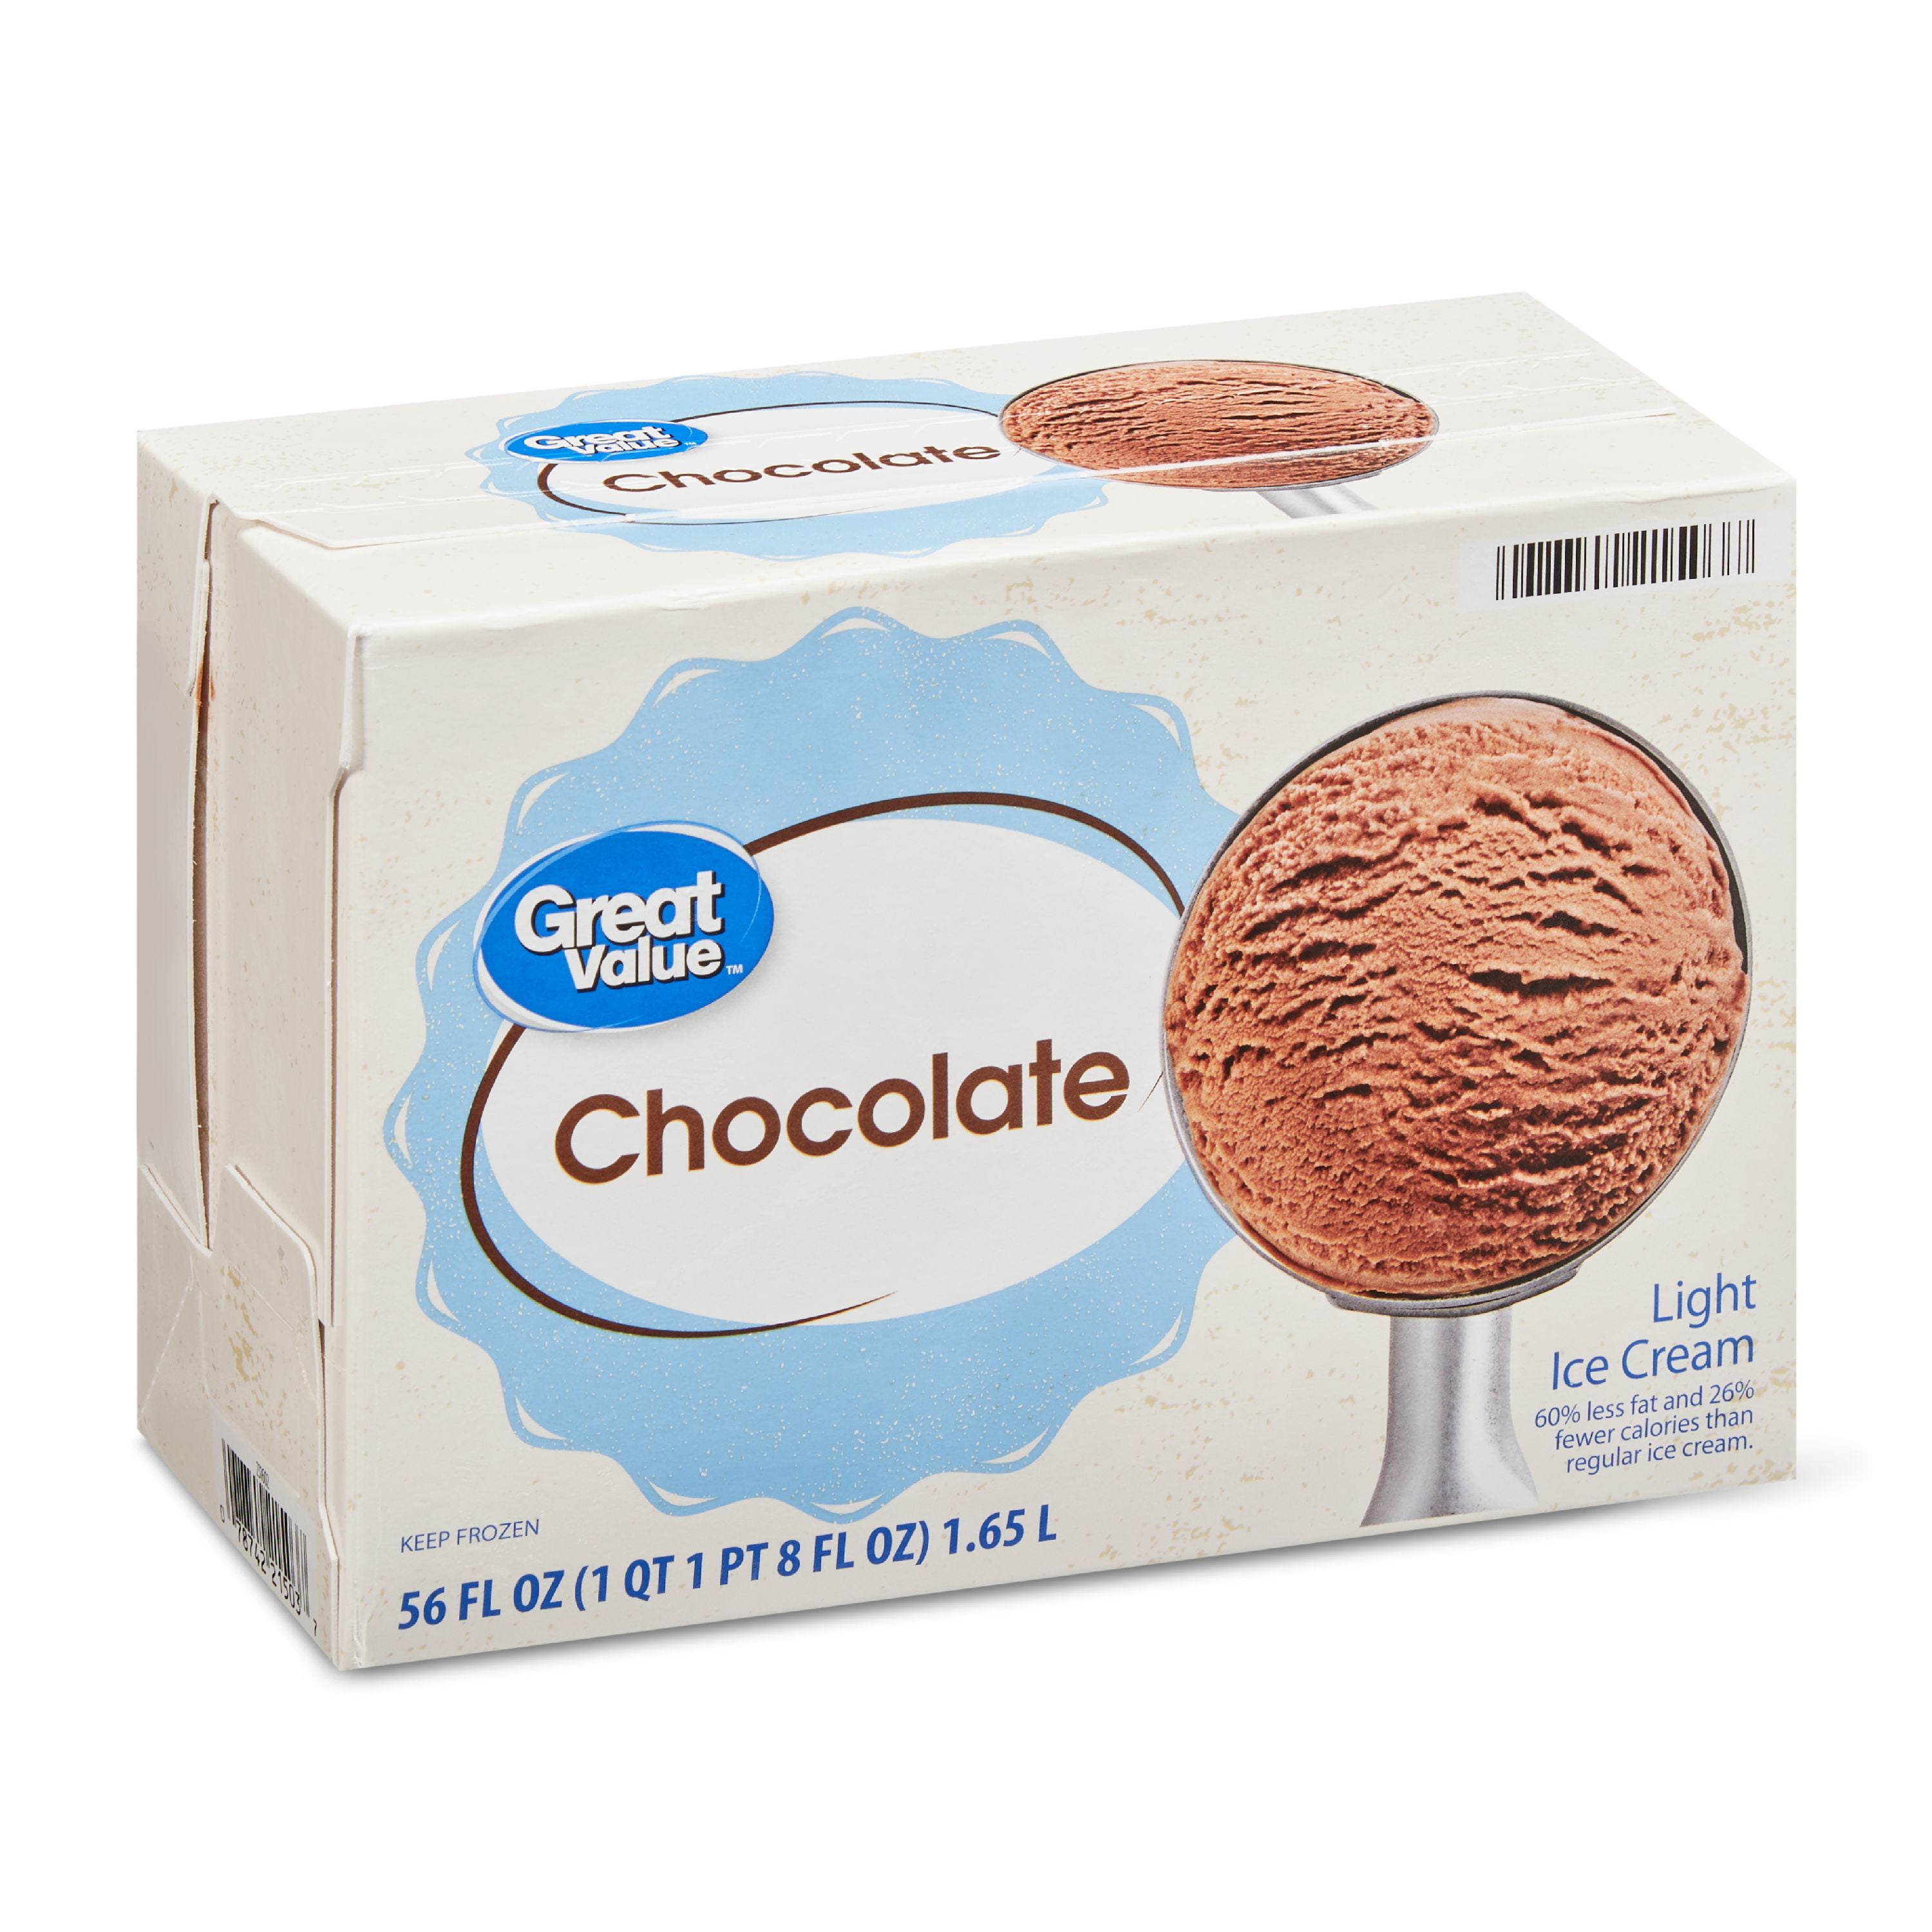 Great Value Chocolate Light Ice Cream, 56 fl oz